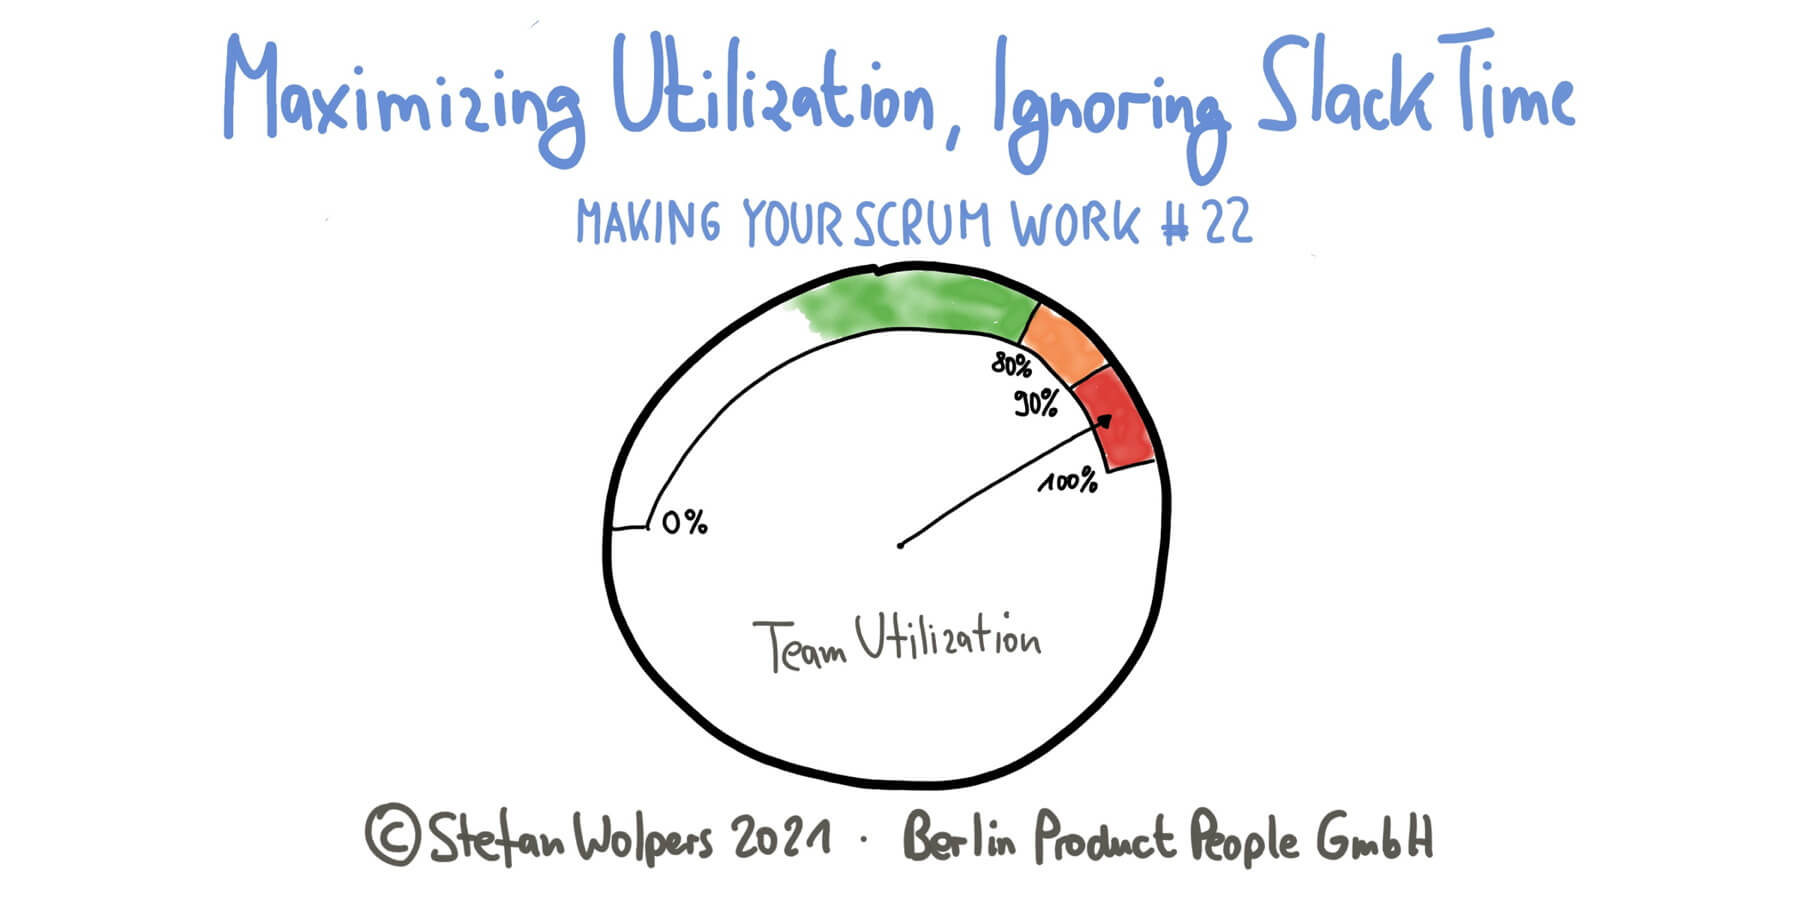 Maximizing Utilization, Ignoring Slack Time — Making Your Scrum Work #22 — Berlin Product People GmbH